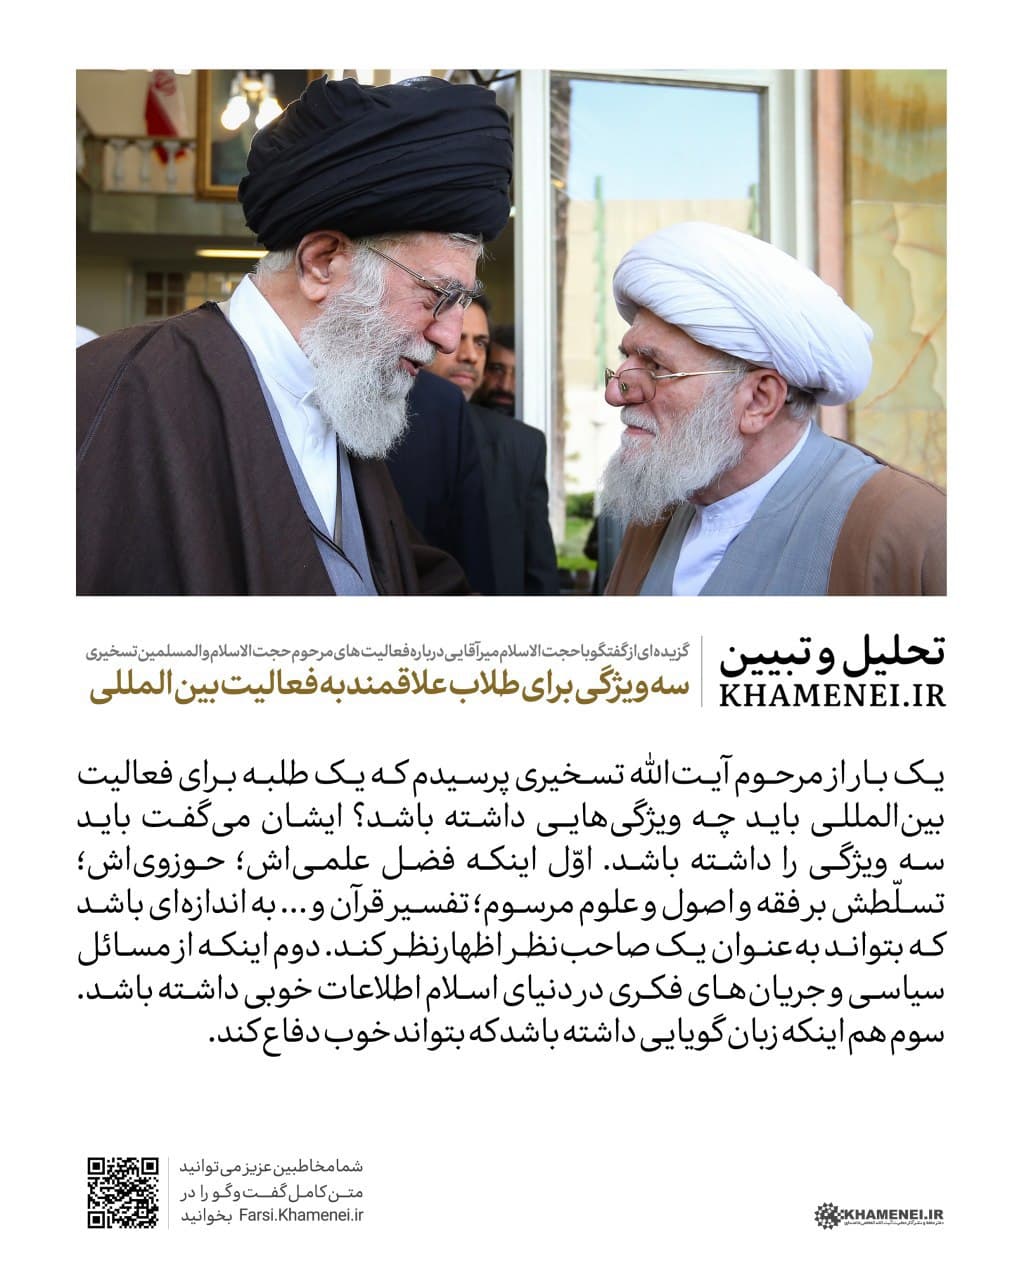 https://idc0-cdn0.khamenei.ir/ndata/news/46582/photo_2020-10-03_16-26-55.jpg